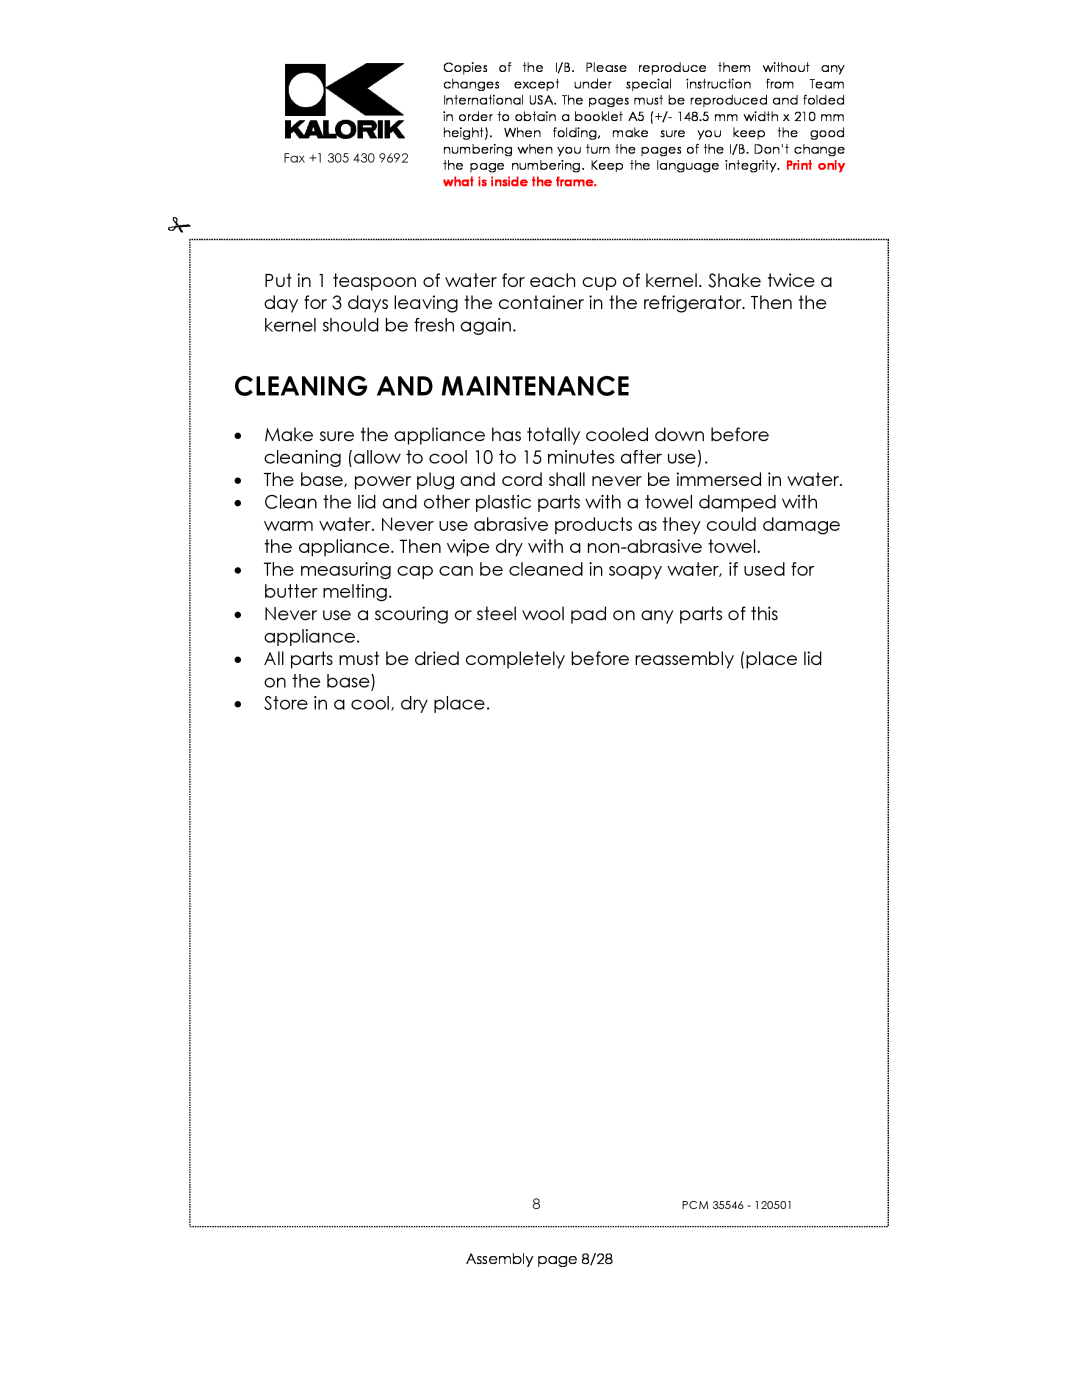 Kalorik PCM 35546 manual Cleaning And Maintenance 